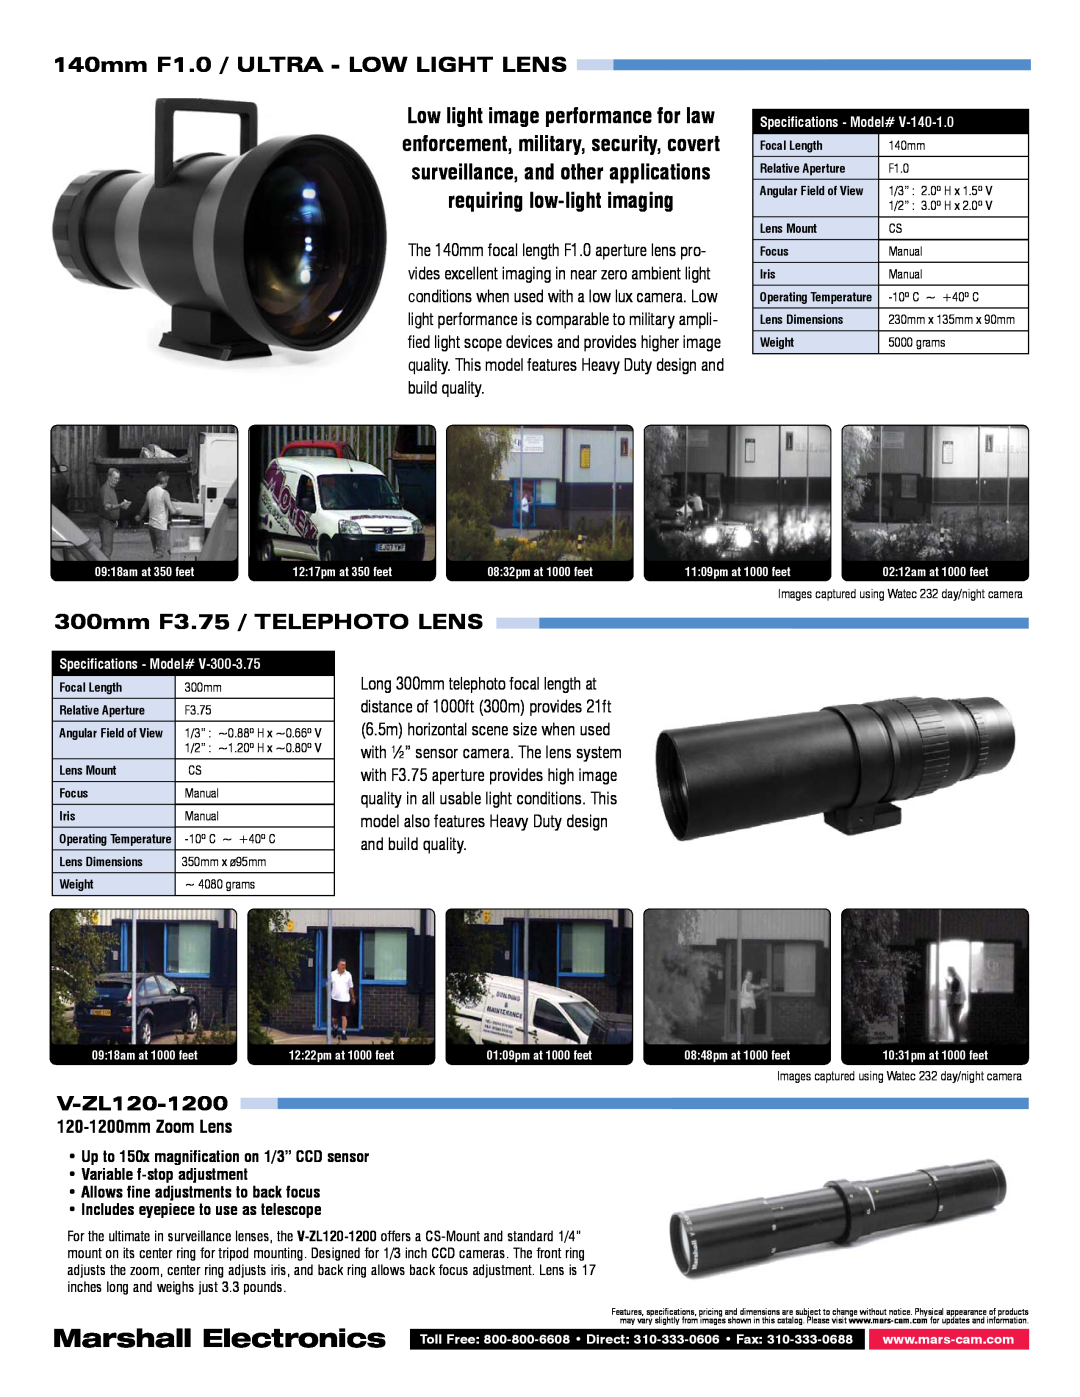 Marshall electronic V-ZPL12 V-ZL120-1200, 120-1200mm Zoom Lens, Up to 150x magnification on 1/3” CCD sensor, Product News 